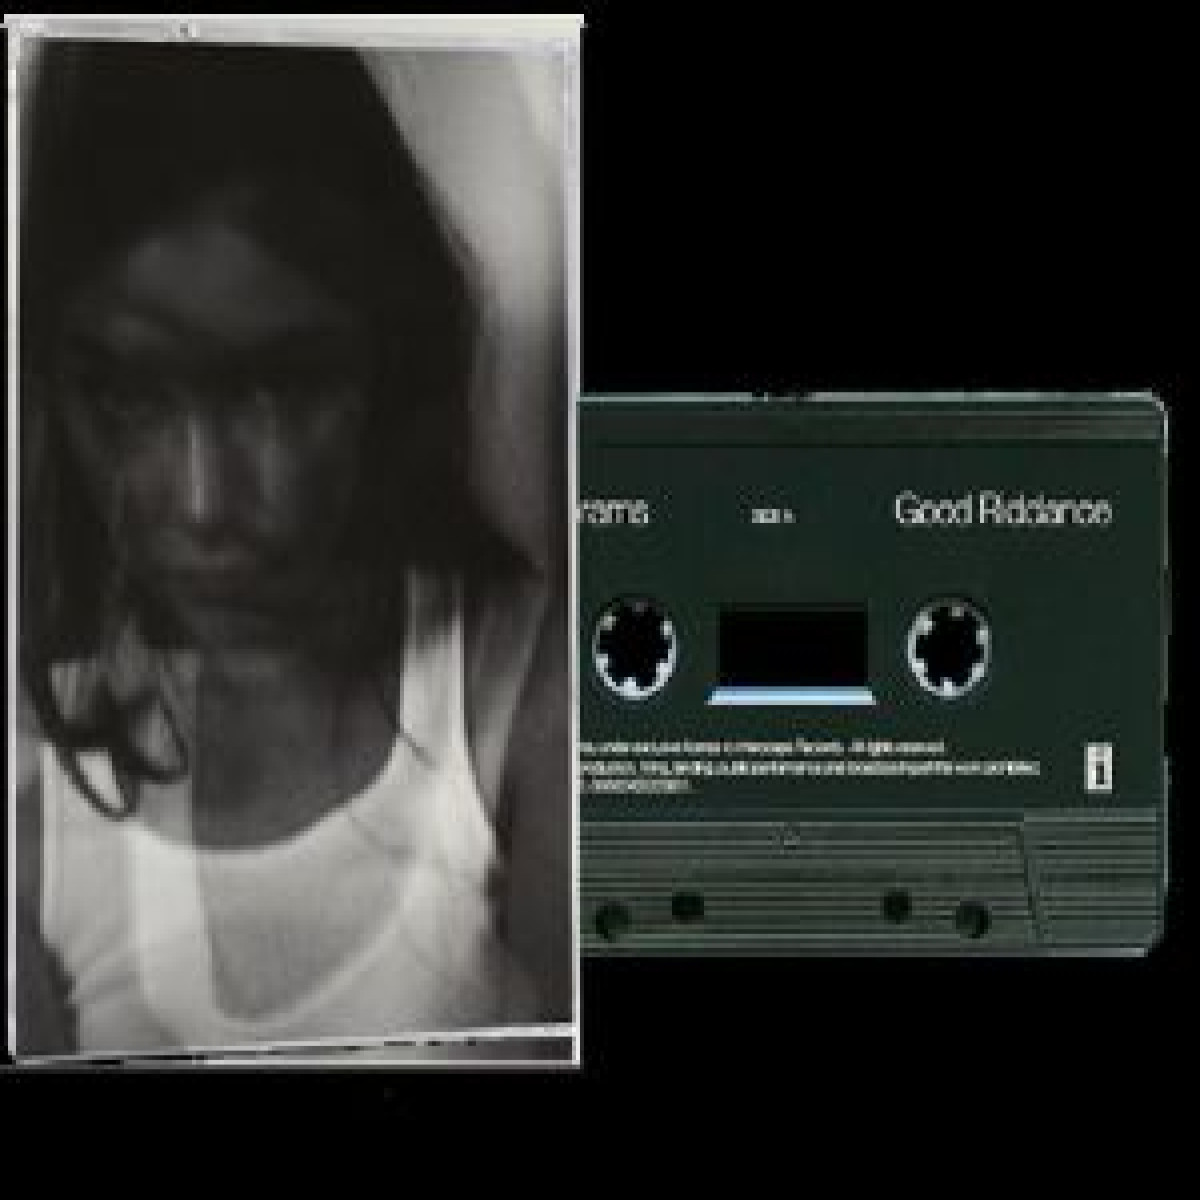 Gracie Abrams - Good Riddance / Interscope 5520360 - Cassette